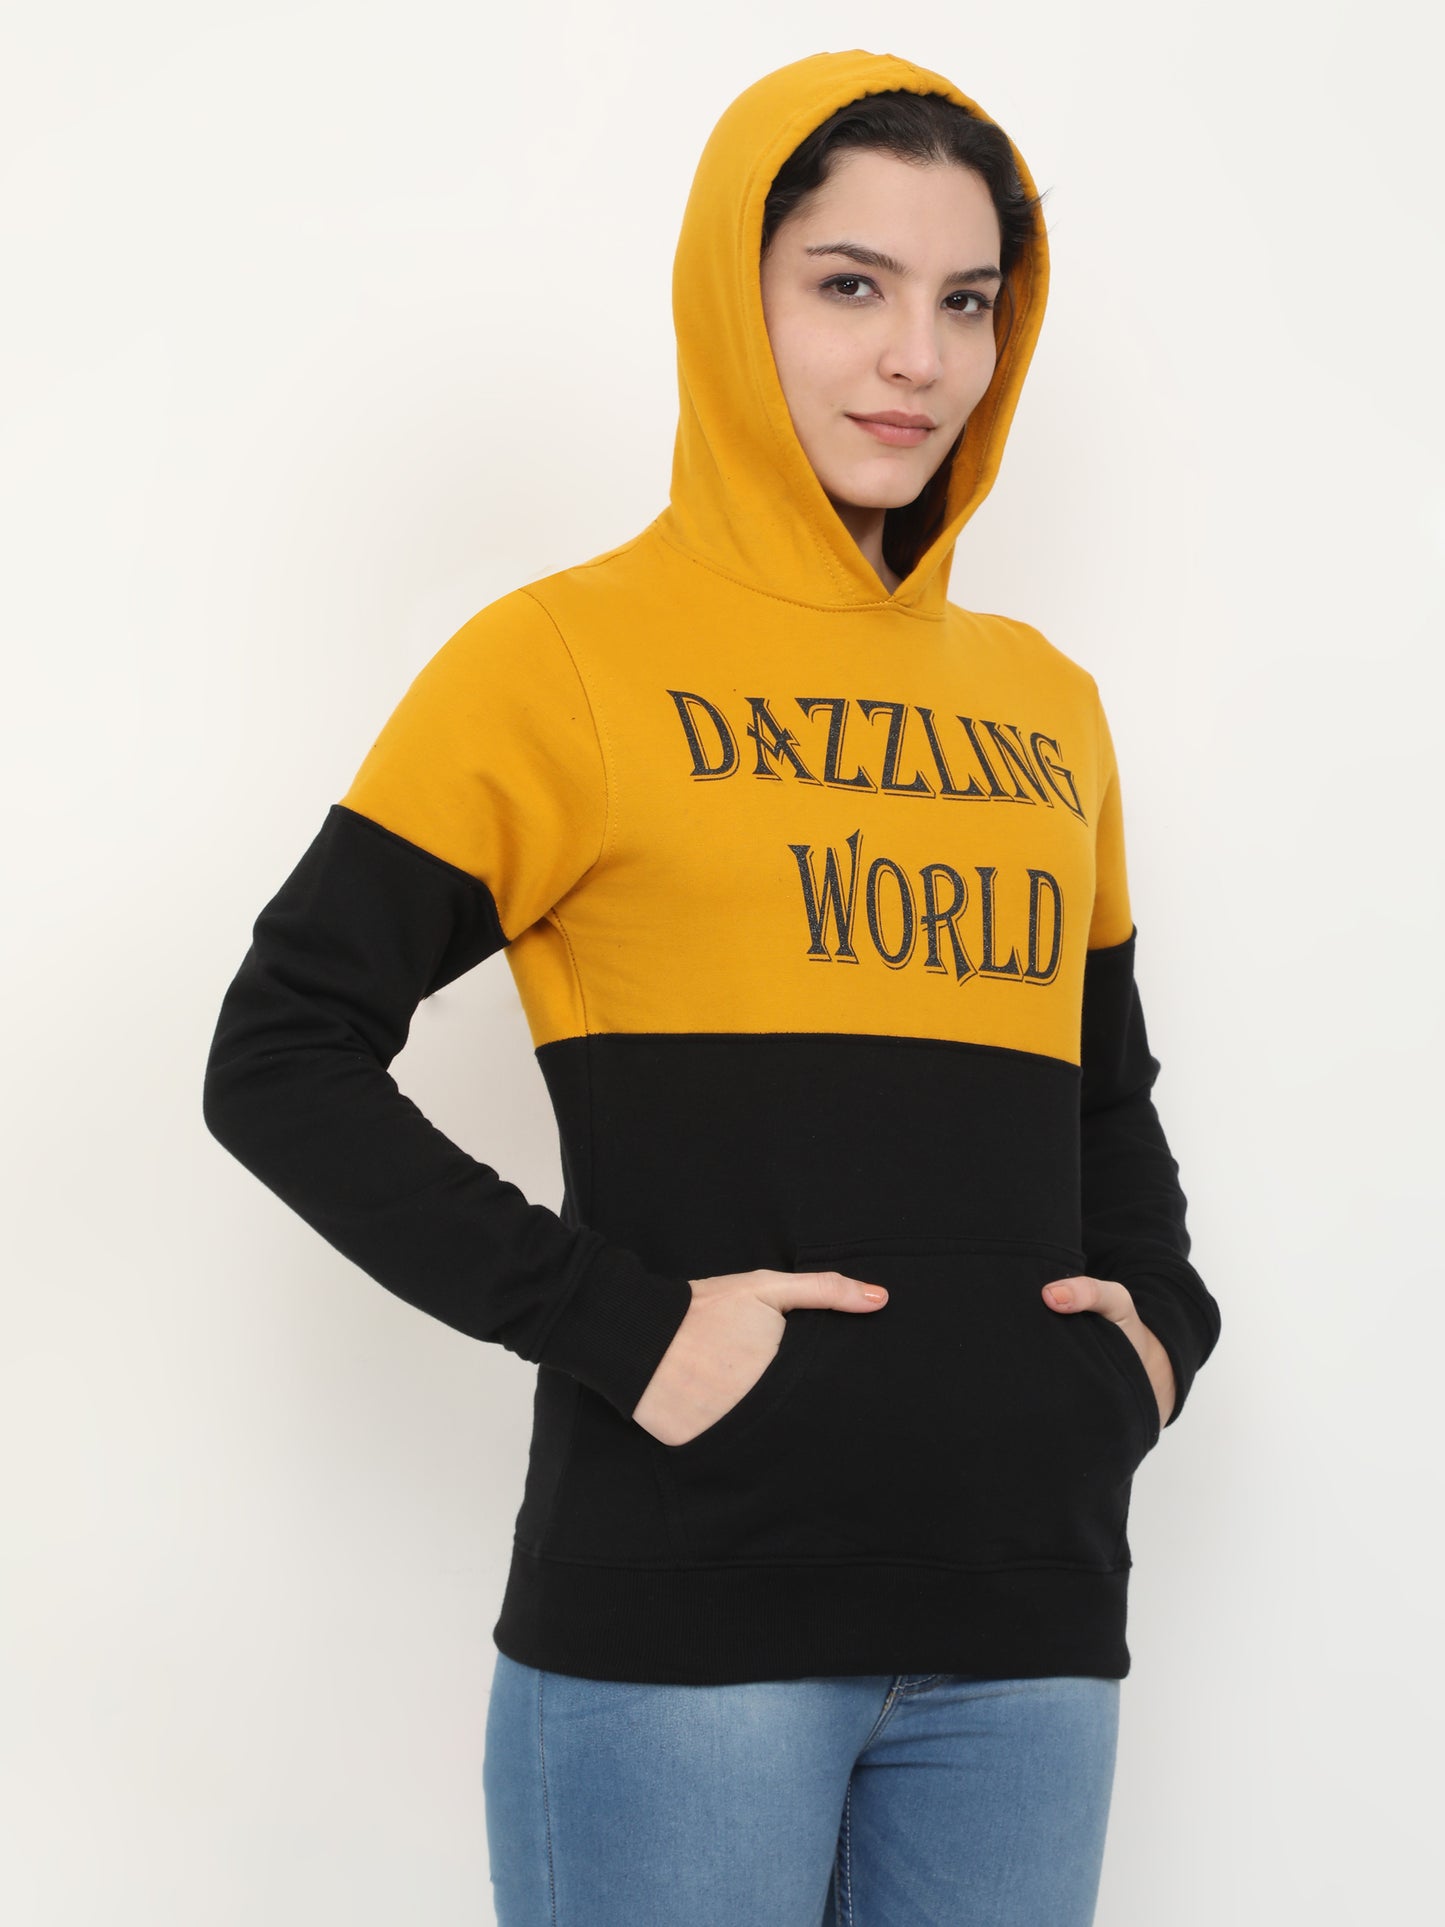 Women's Cotton Printed Mustardblack Color Sweatshirt/Hoodies